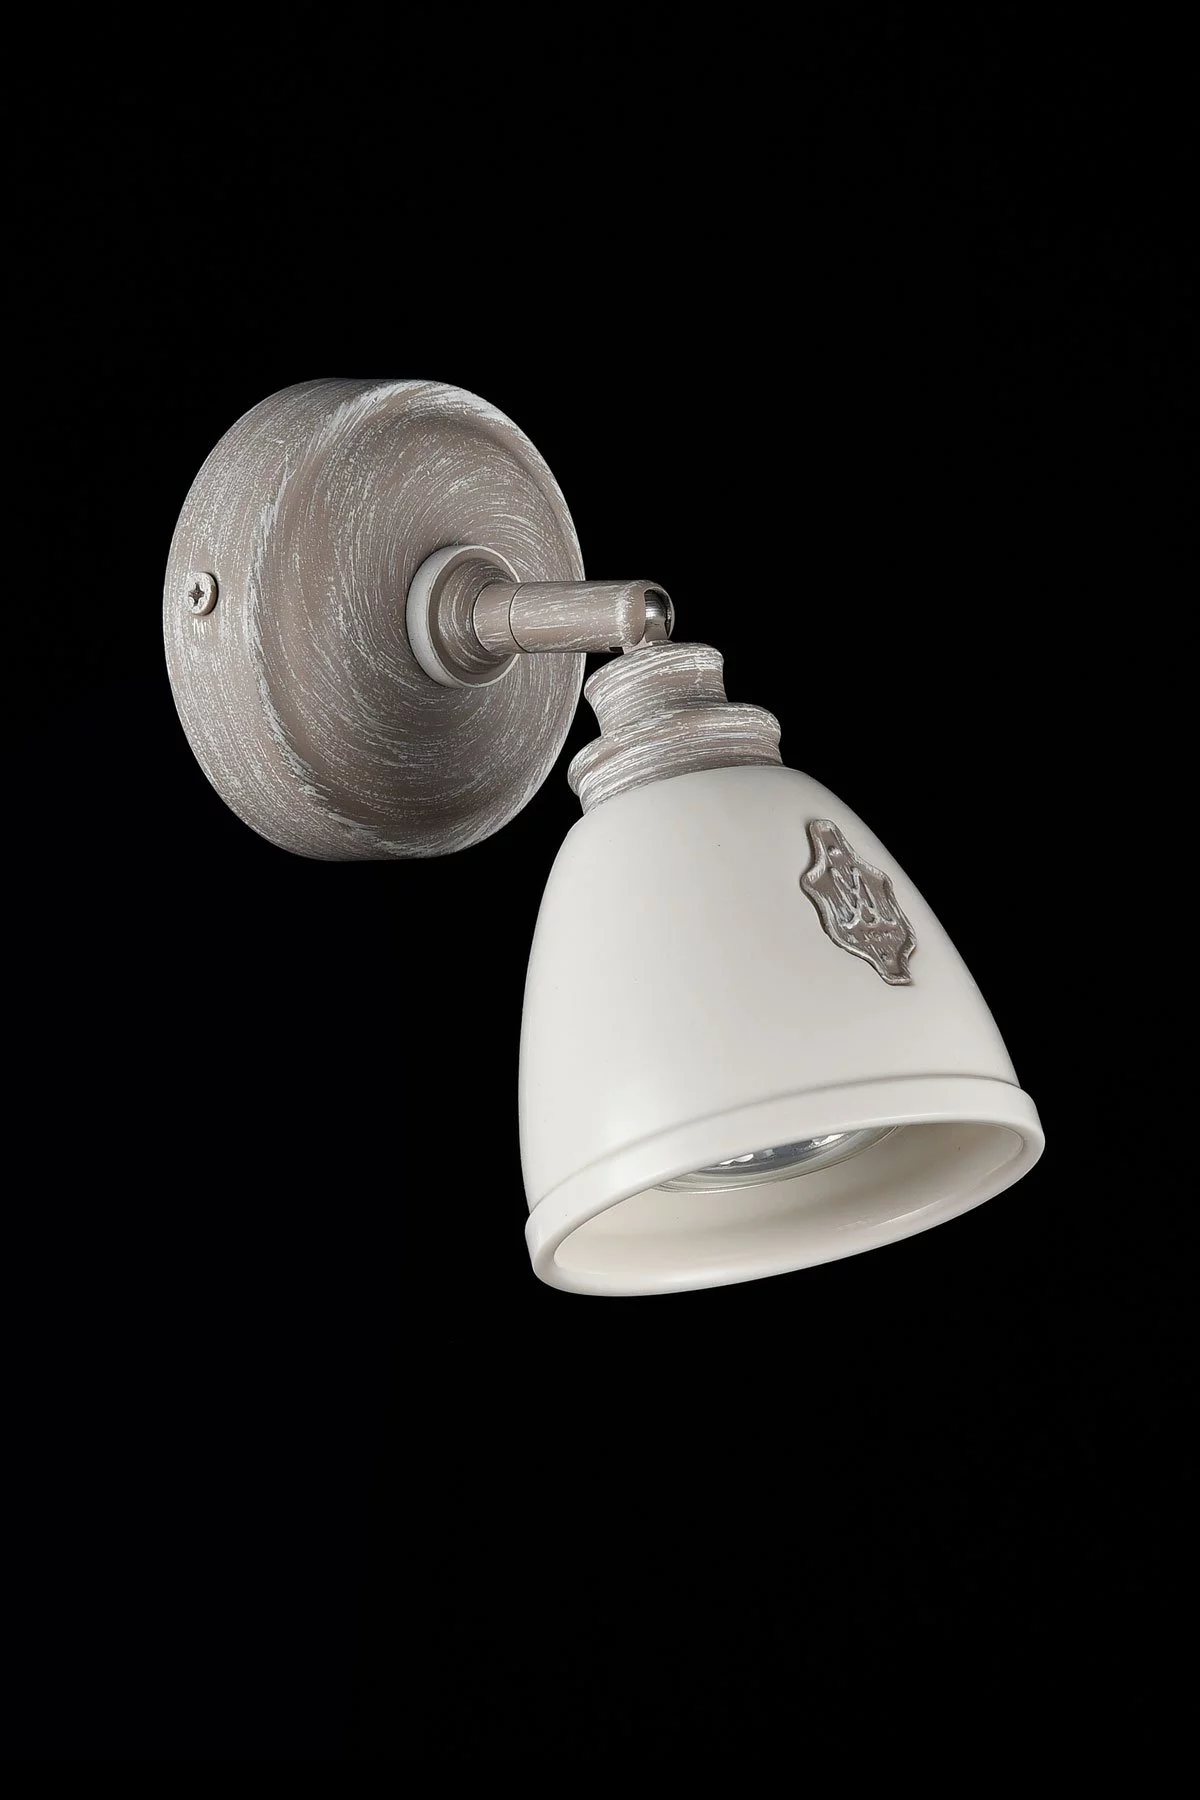   
                        
                        Бра MAYTONI (Германия) 96923    
                         в стиле Прованс.  
                        Тип источника света: светодиодная лампа, сменная.                                                 Цвета плафонов и подвесок: Белый.                         Материал: Керамика.                          фото 2